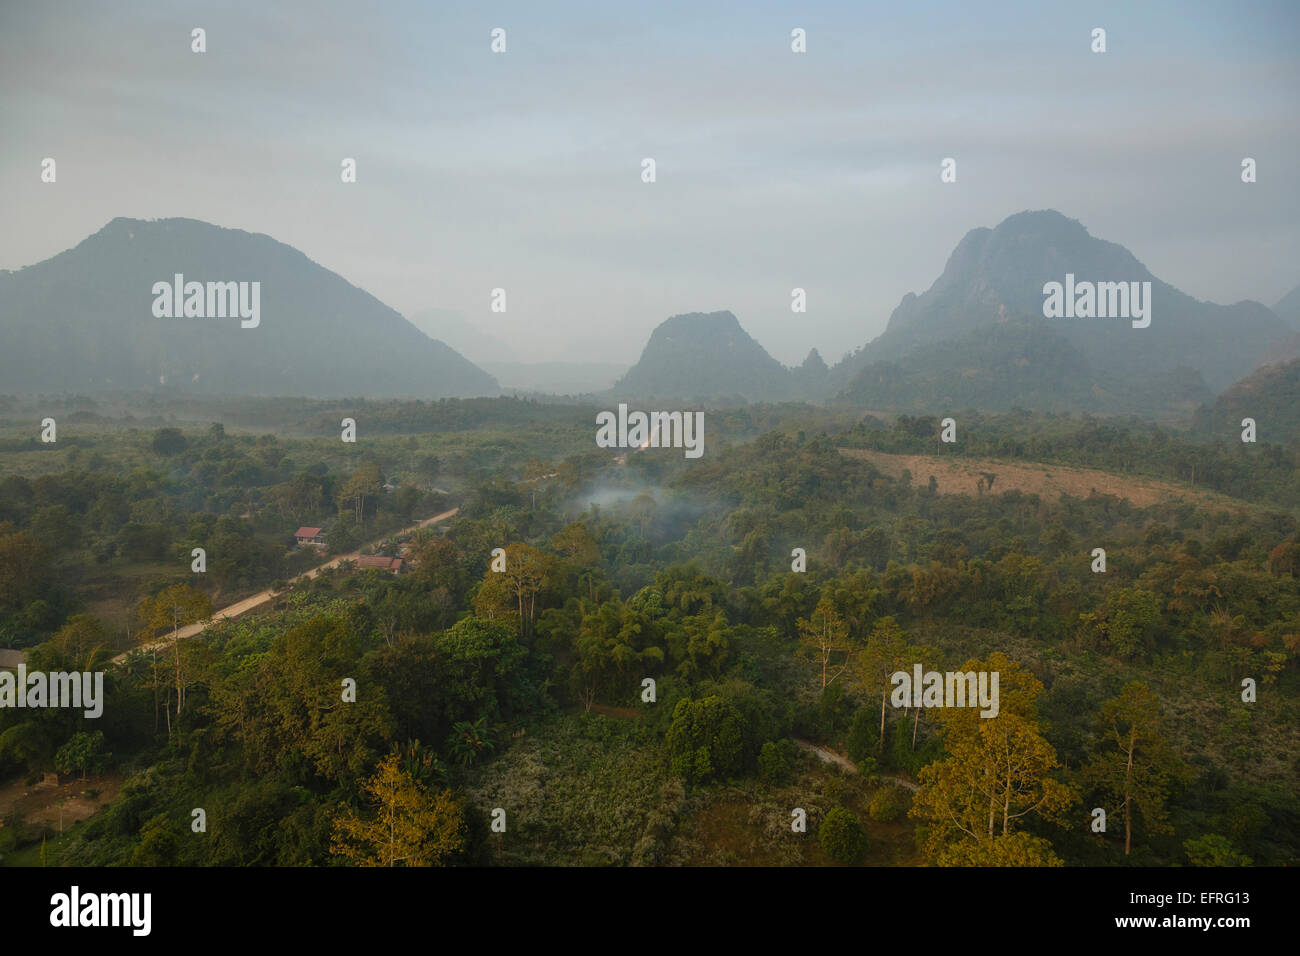 Vista aérea de los alrededores de Vang Vieng, en Laos. Foto de stock